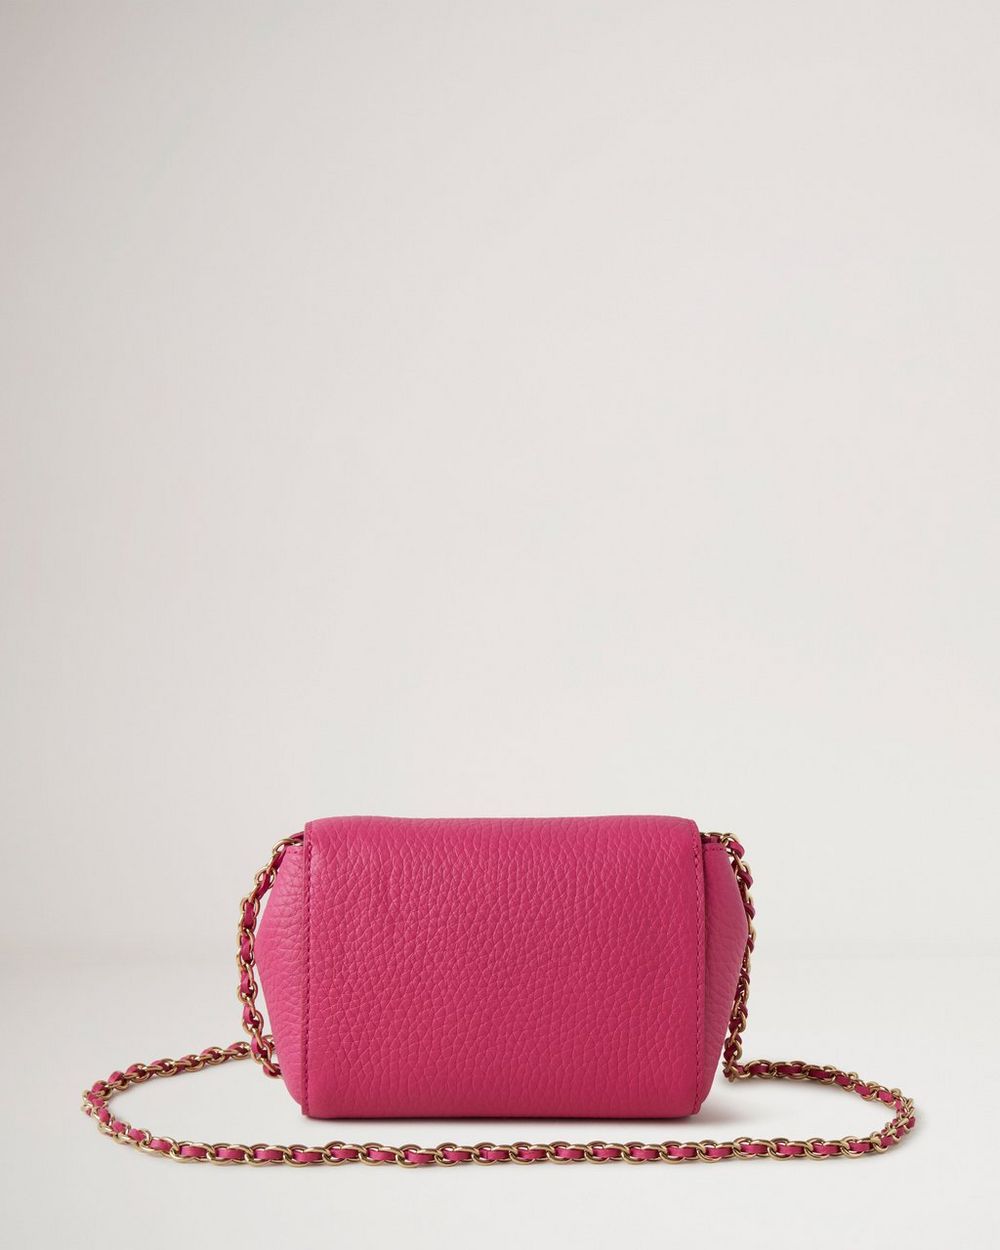 Mulberry Lily Handbag - Authentic Pre-Owned Designer Handbags